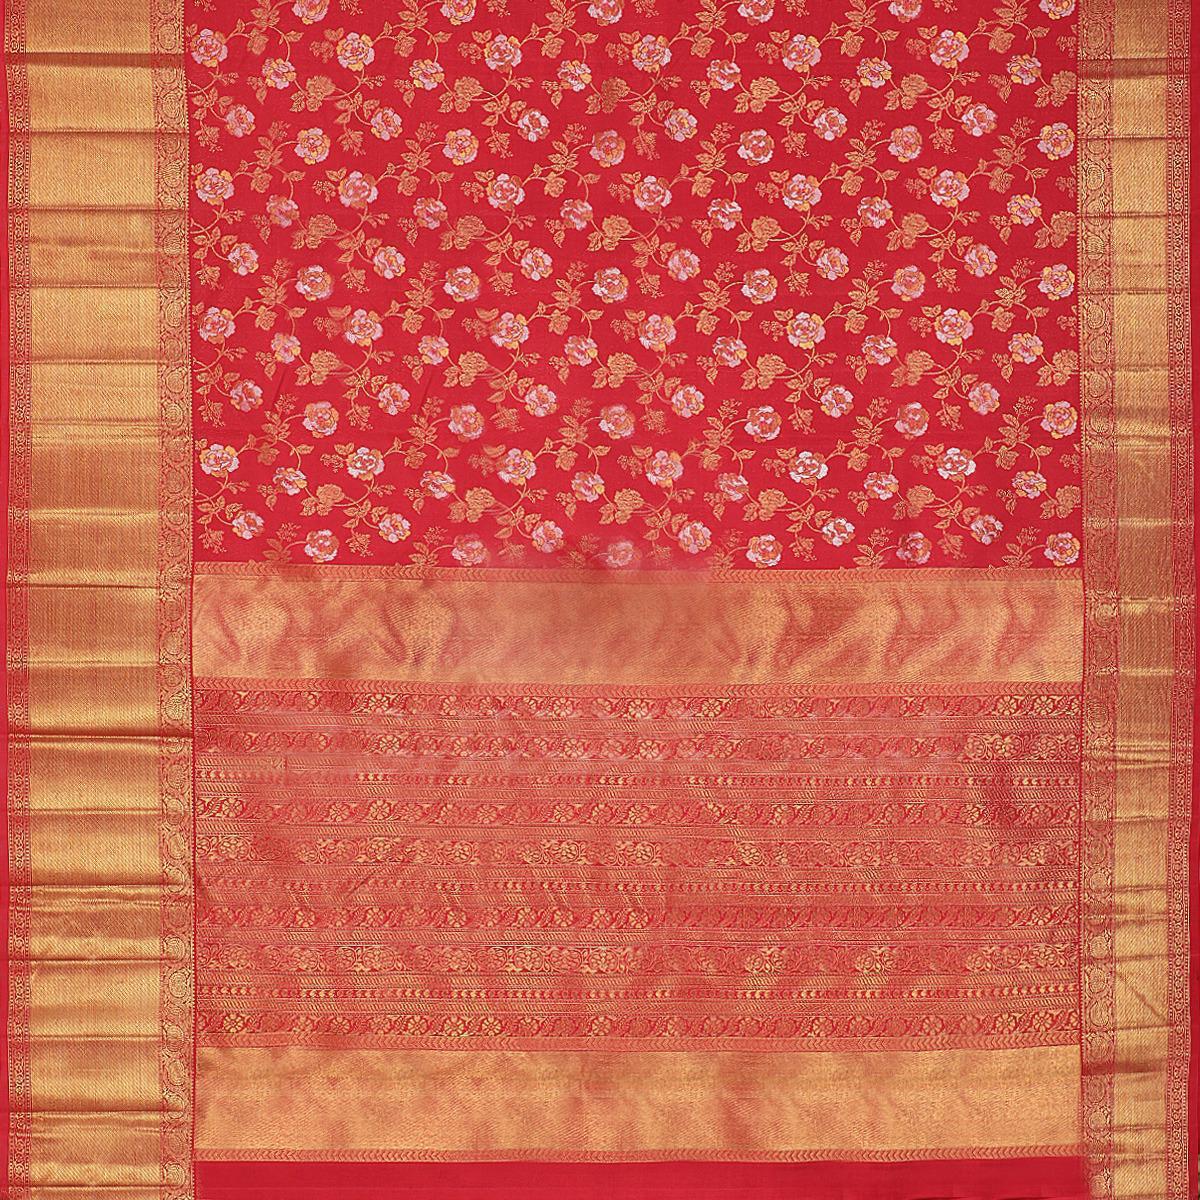 Red Rose Soft Lichi Silk Saree For Women